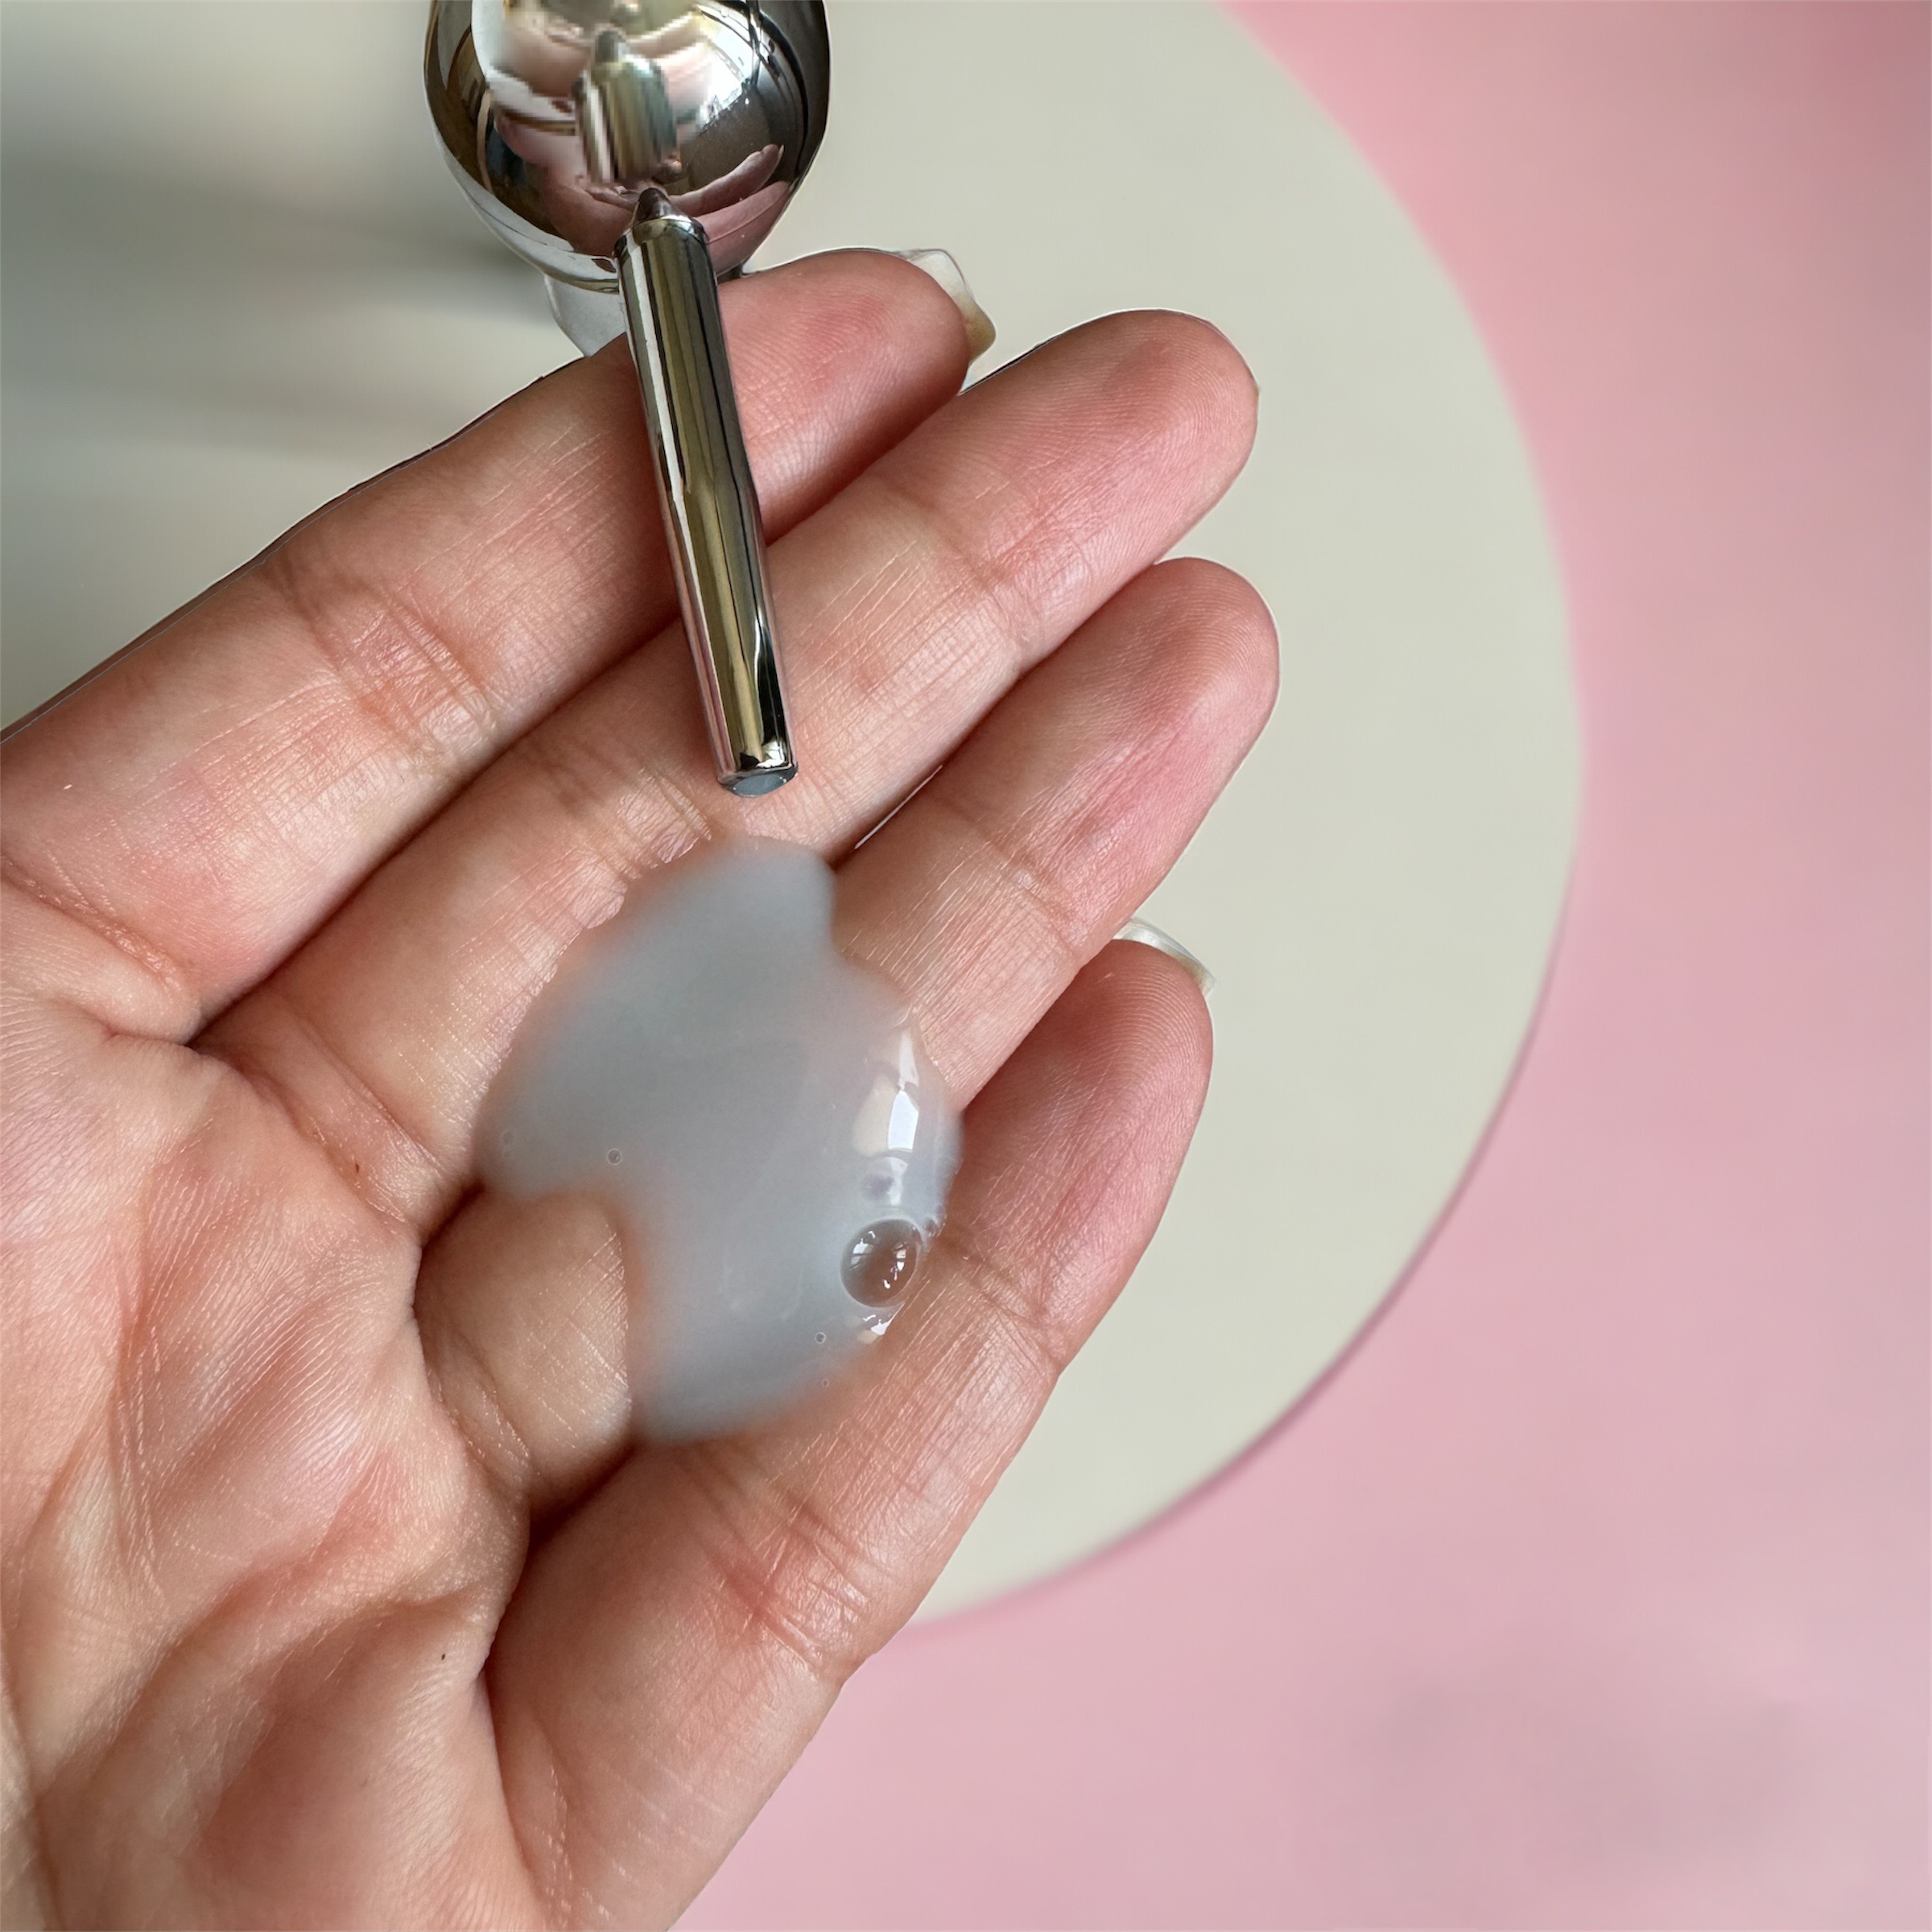 Dott Cream-Soap Mystic Touch